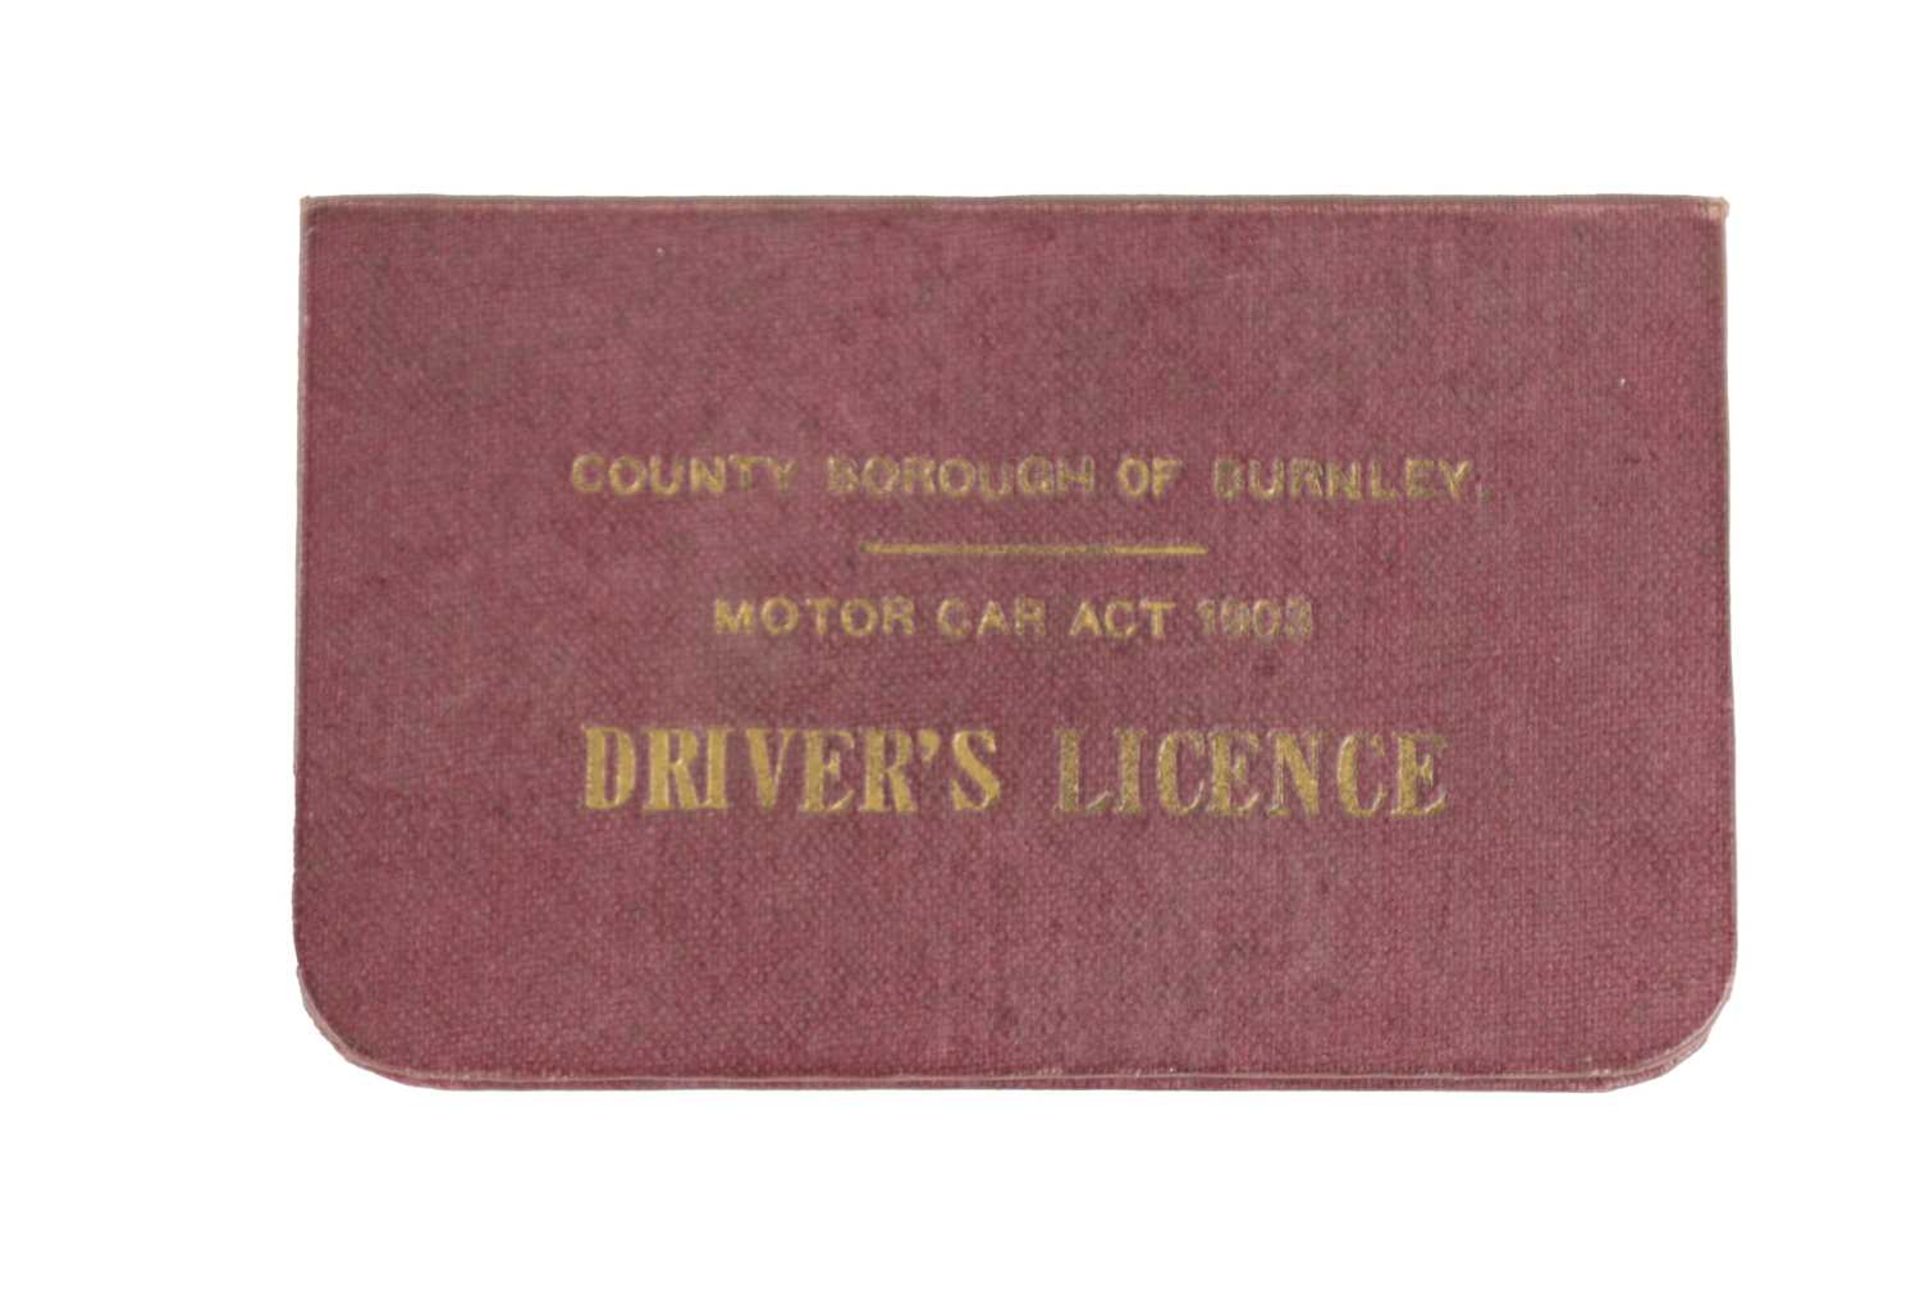 AN ORIGINAL 1928 COUNTY BOROUGH OF BURNLEY DRIVING LICENSE